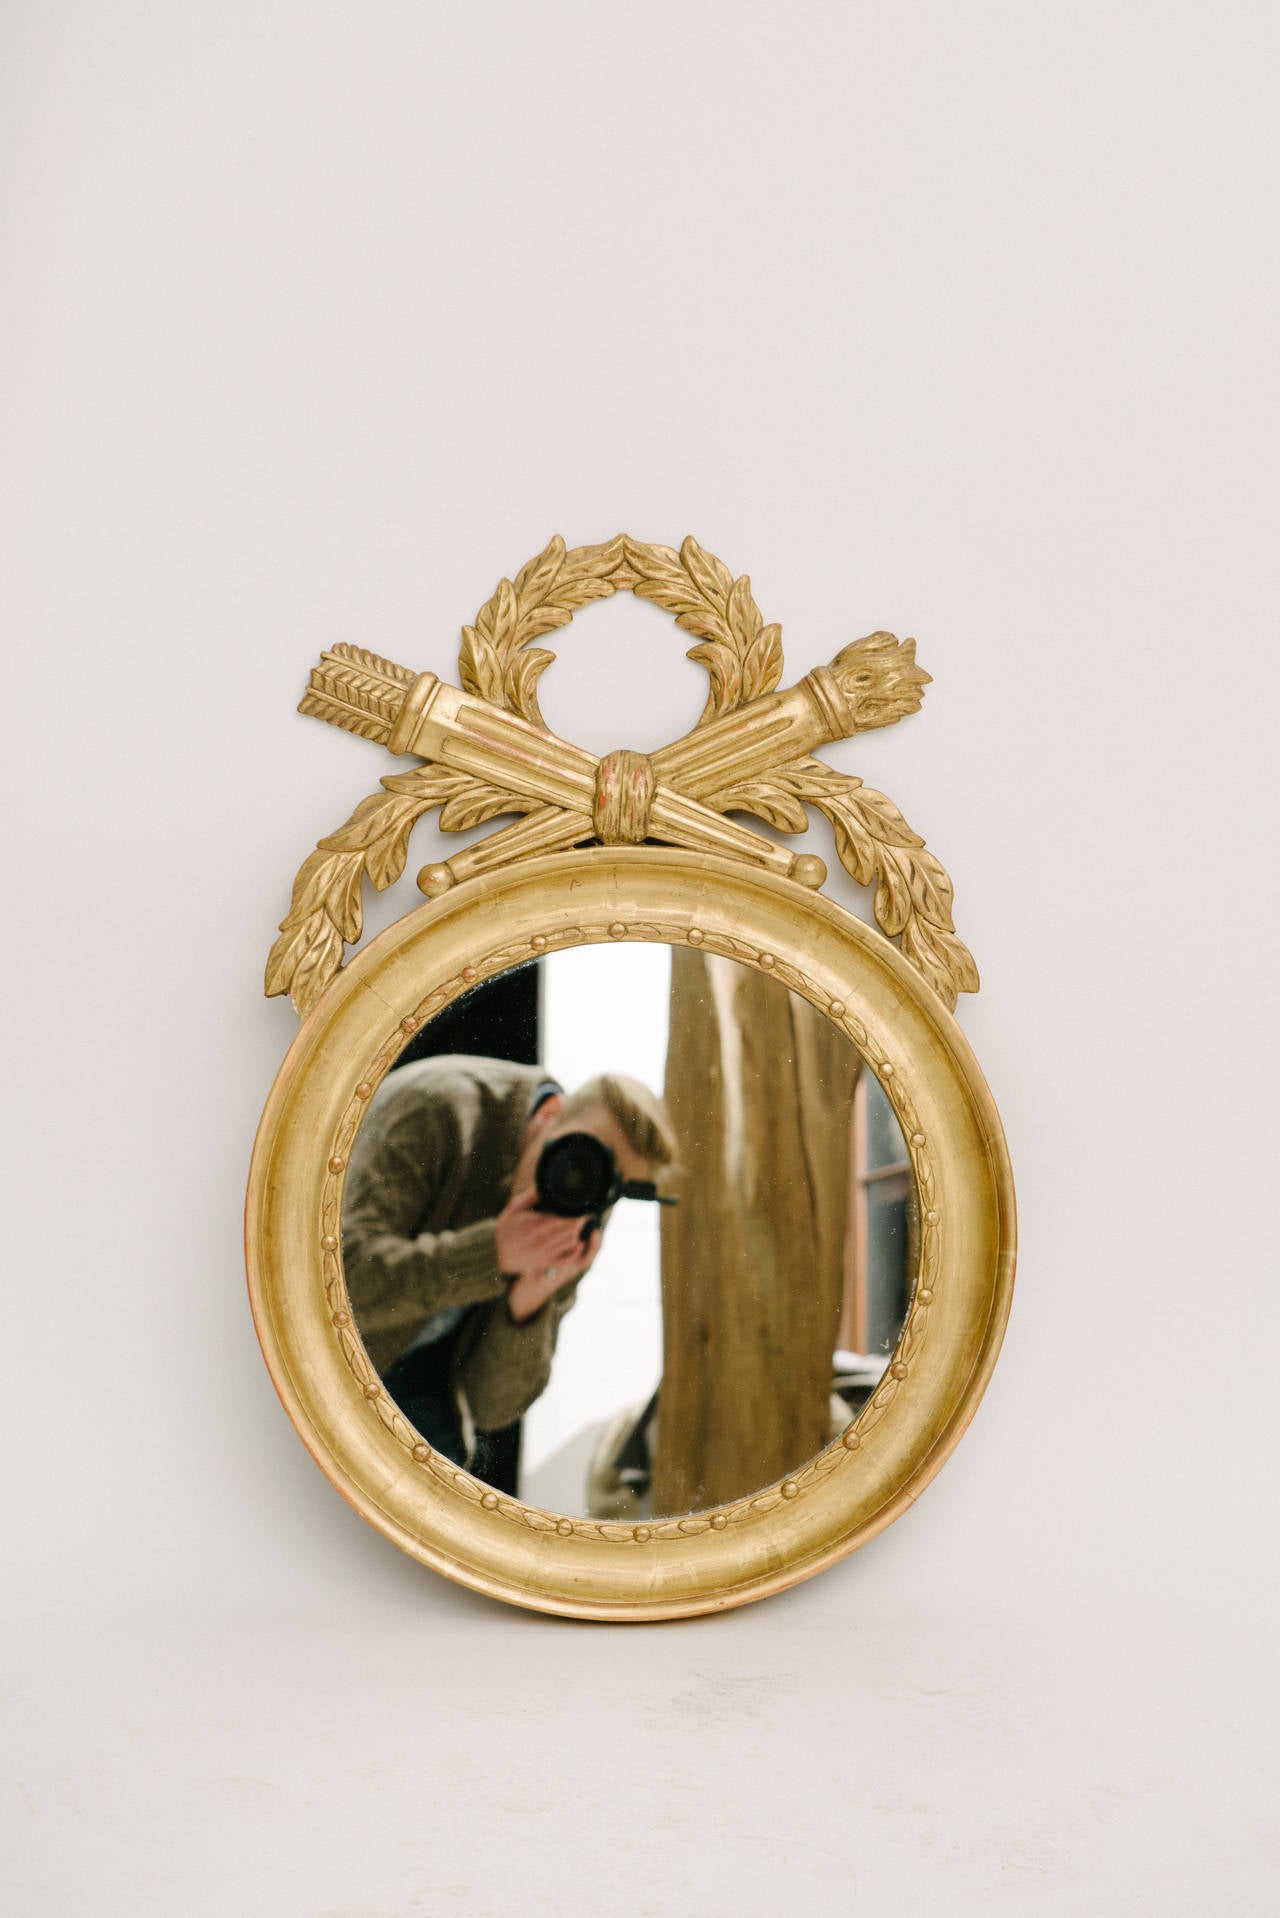 19th century French giltwood round mirror.